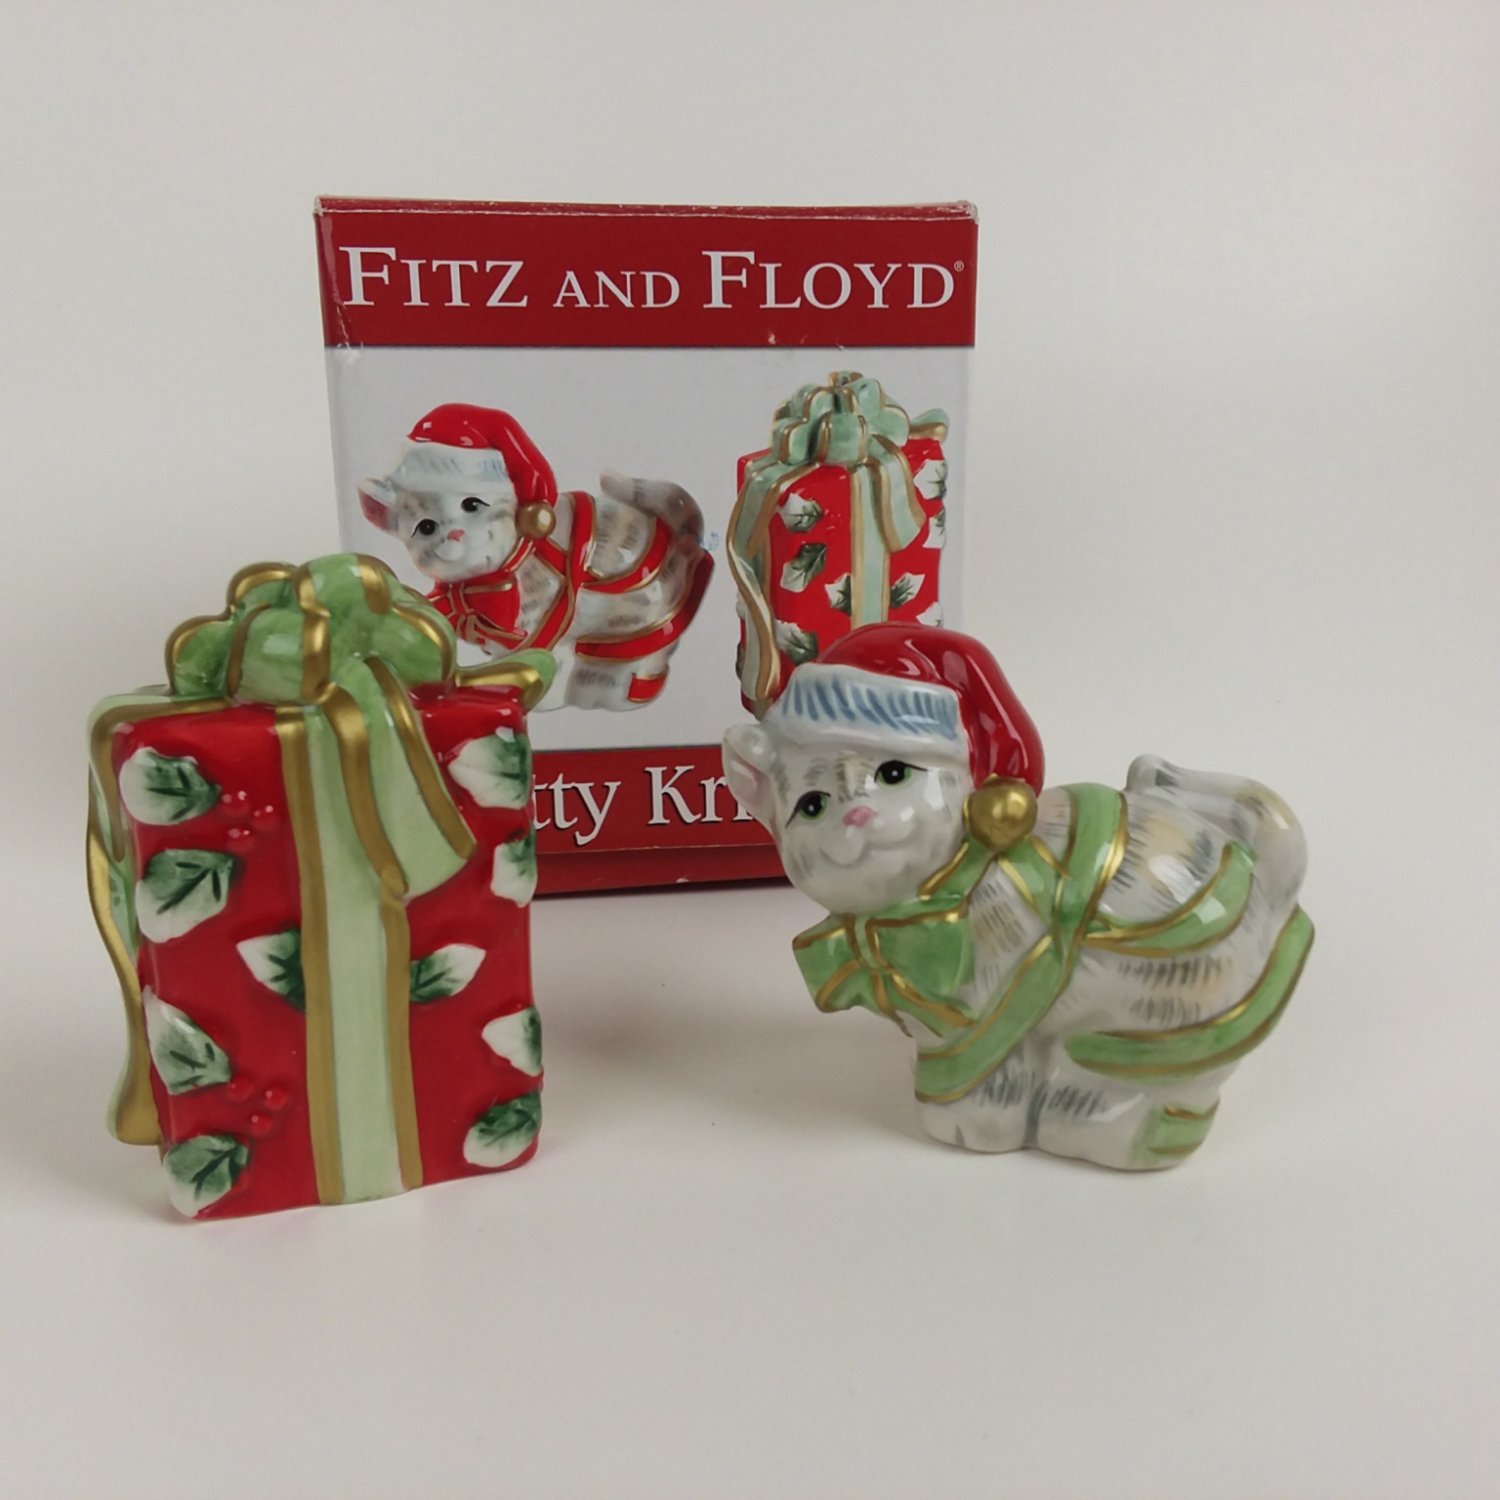 Fitz & Floyd Kitty Kringle Salt and Pepper Shakers in original box  appear unused